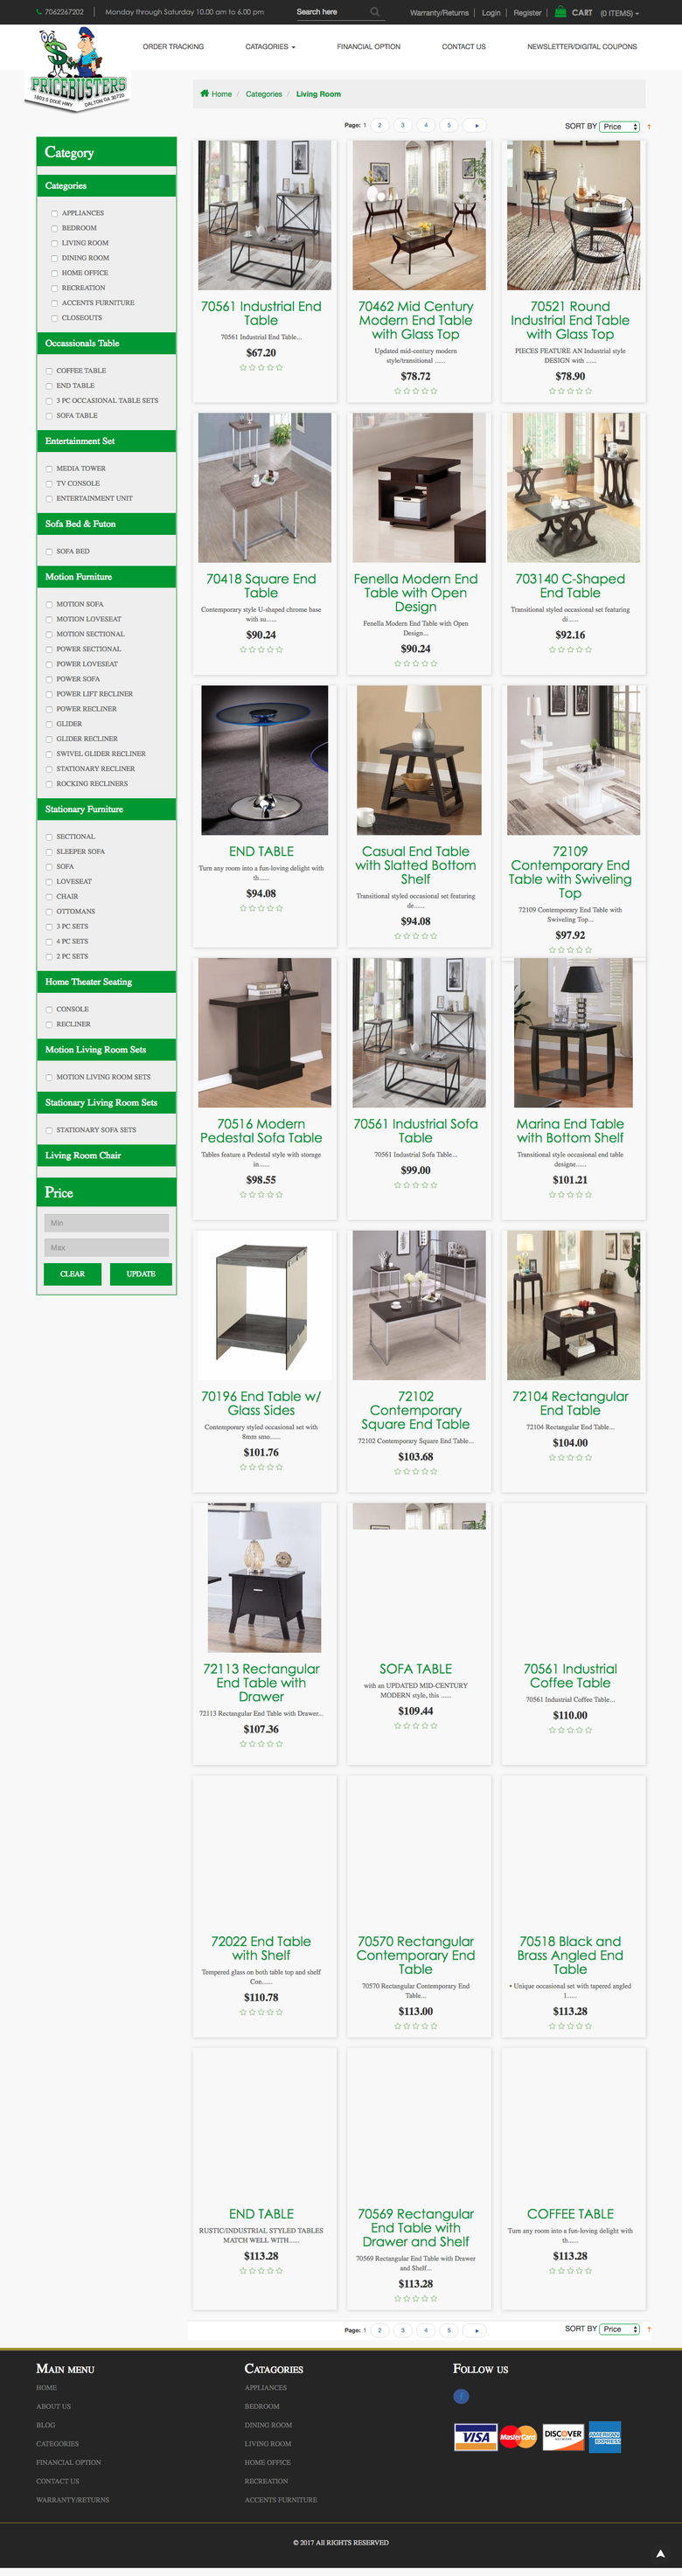 PriceBuster Online Ecommerce Furniture Portal